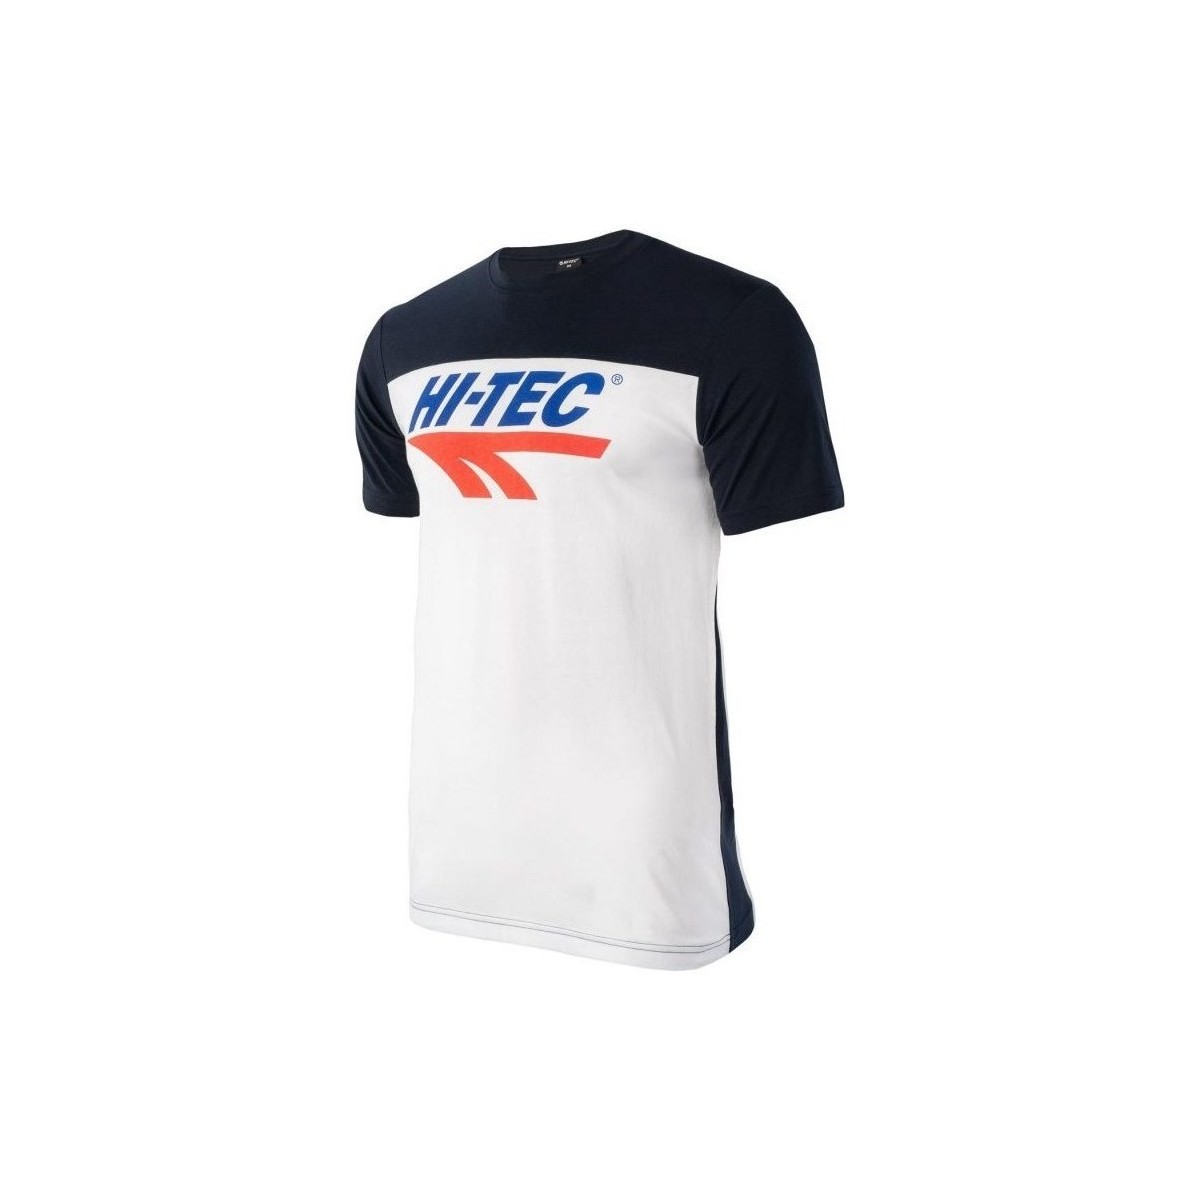 Kleidung Herren T-Shirts Hi-Tec Retro Weiss